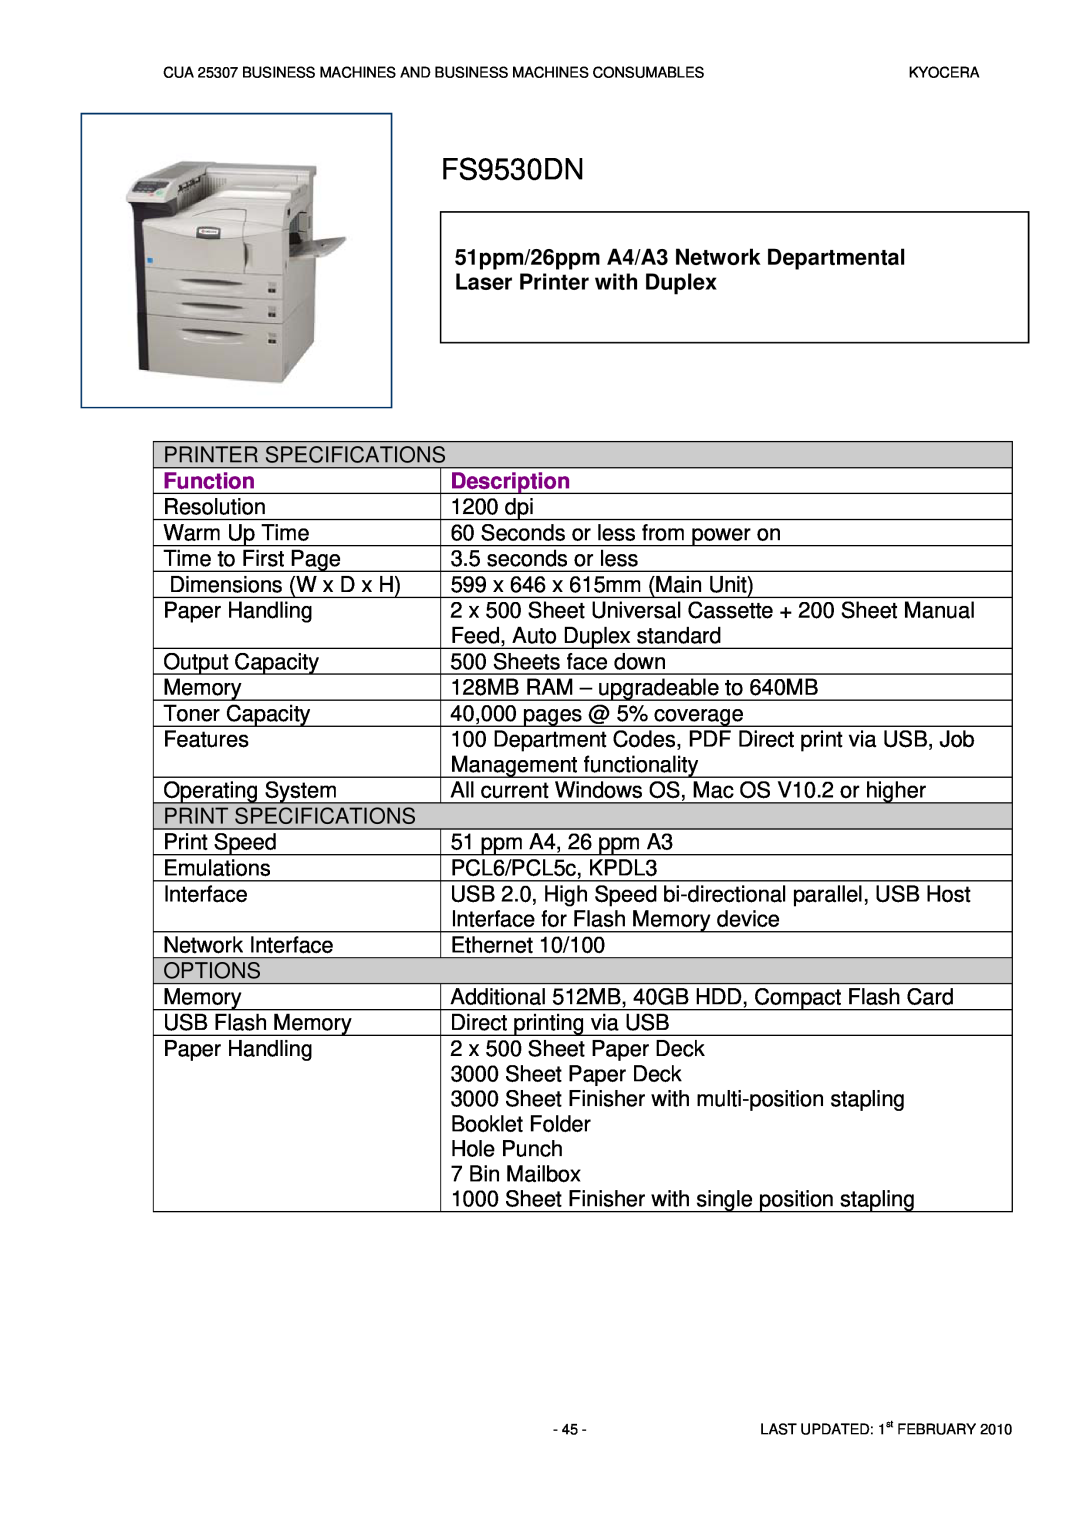 Kyocera CUA 25307 manual FS9530DN, Function, Description 